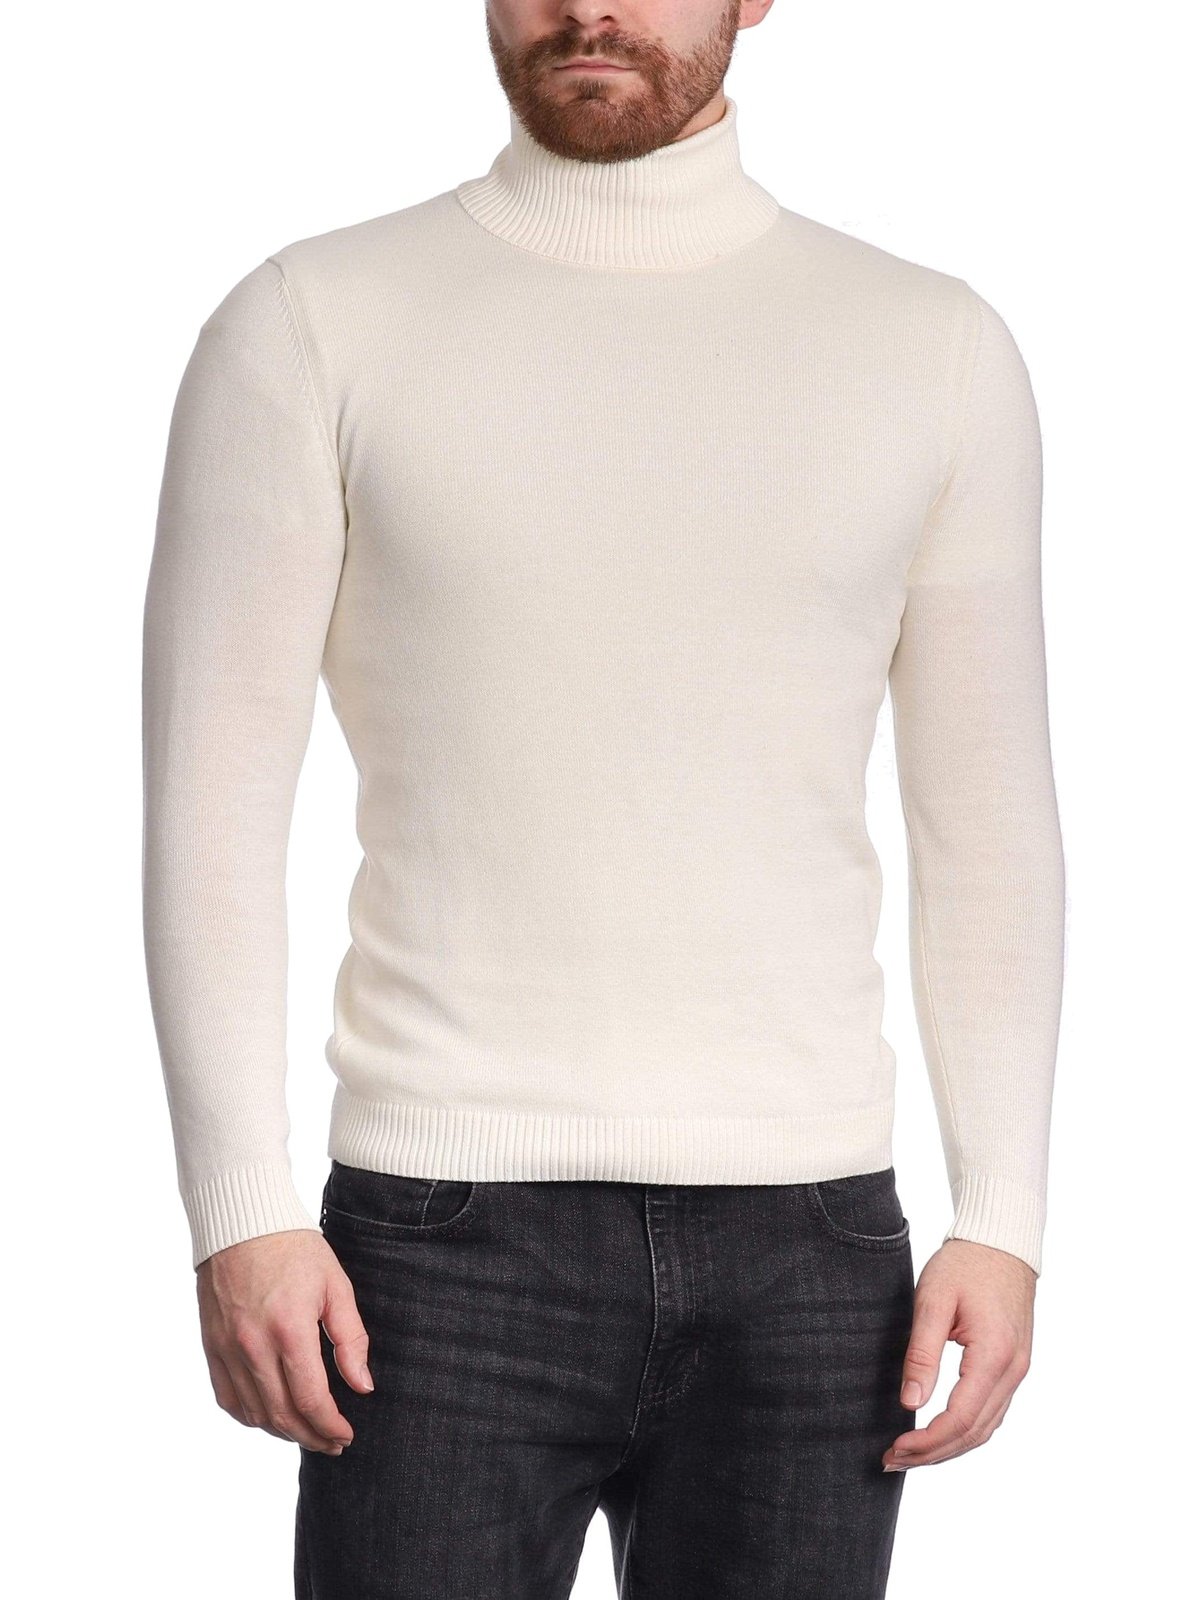 Arthur Black SWEATERS Arthur Black Men's Solid Cream Pullover Cotton Blend Turtleneck Sweater Shirt